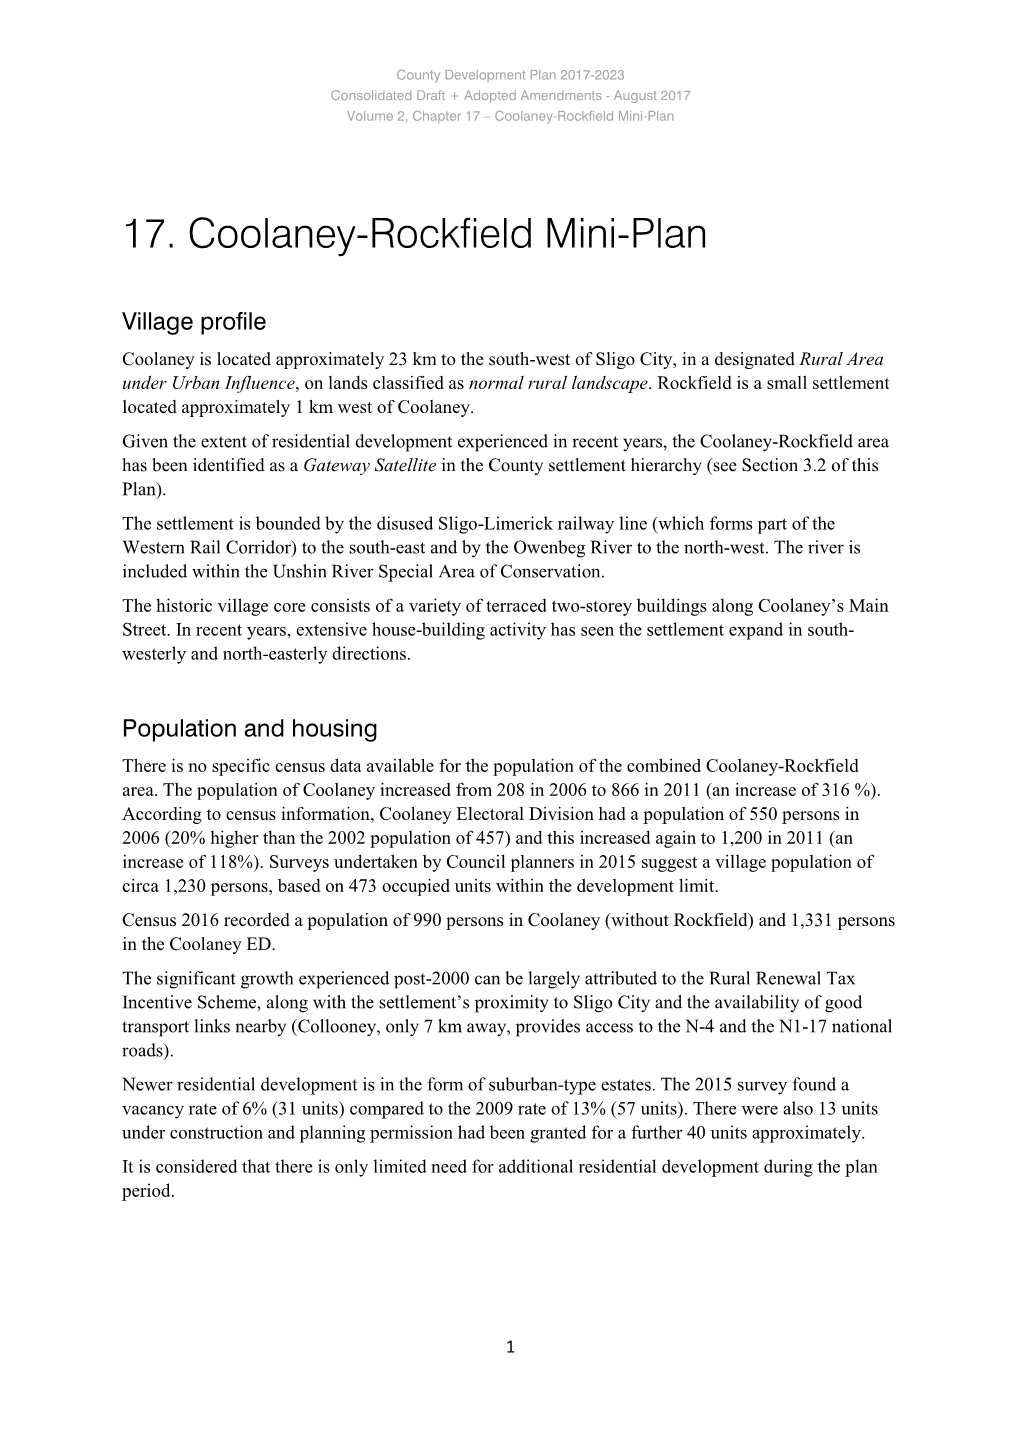 17. Coolaney-Rockfield Mini-Plan